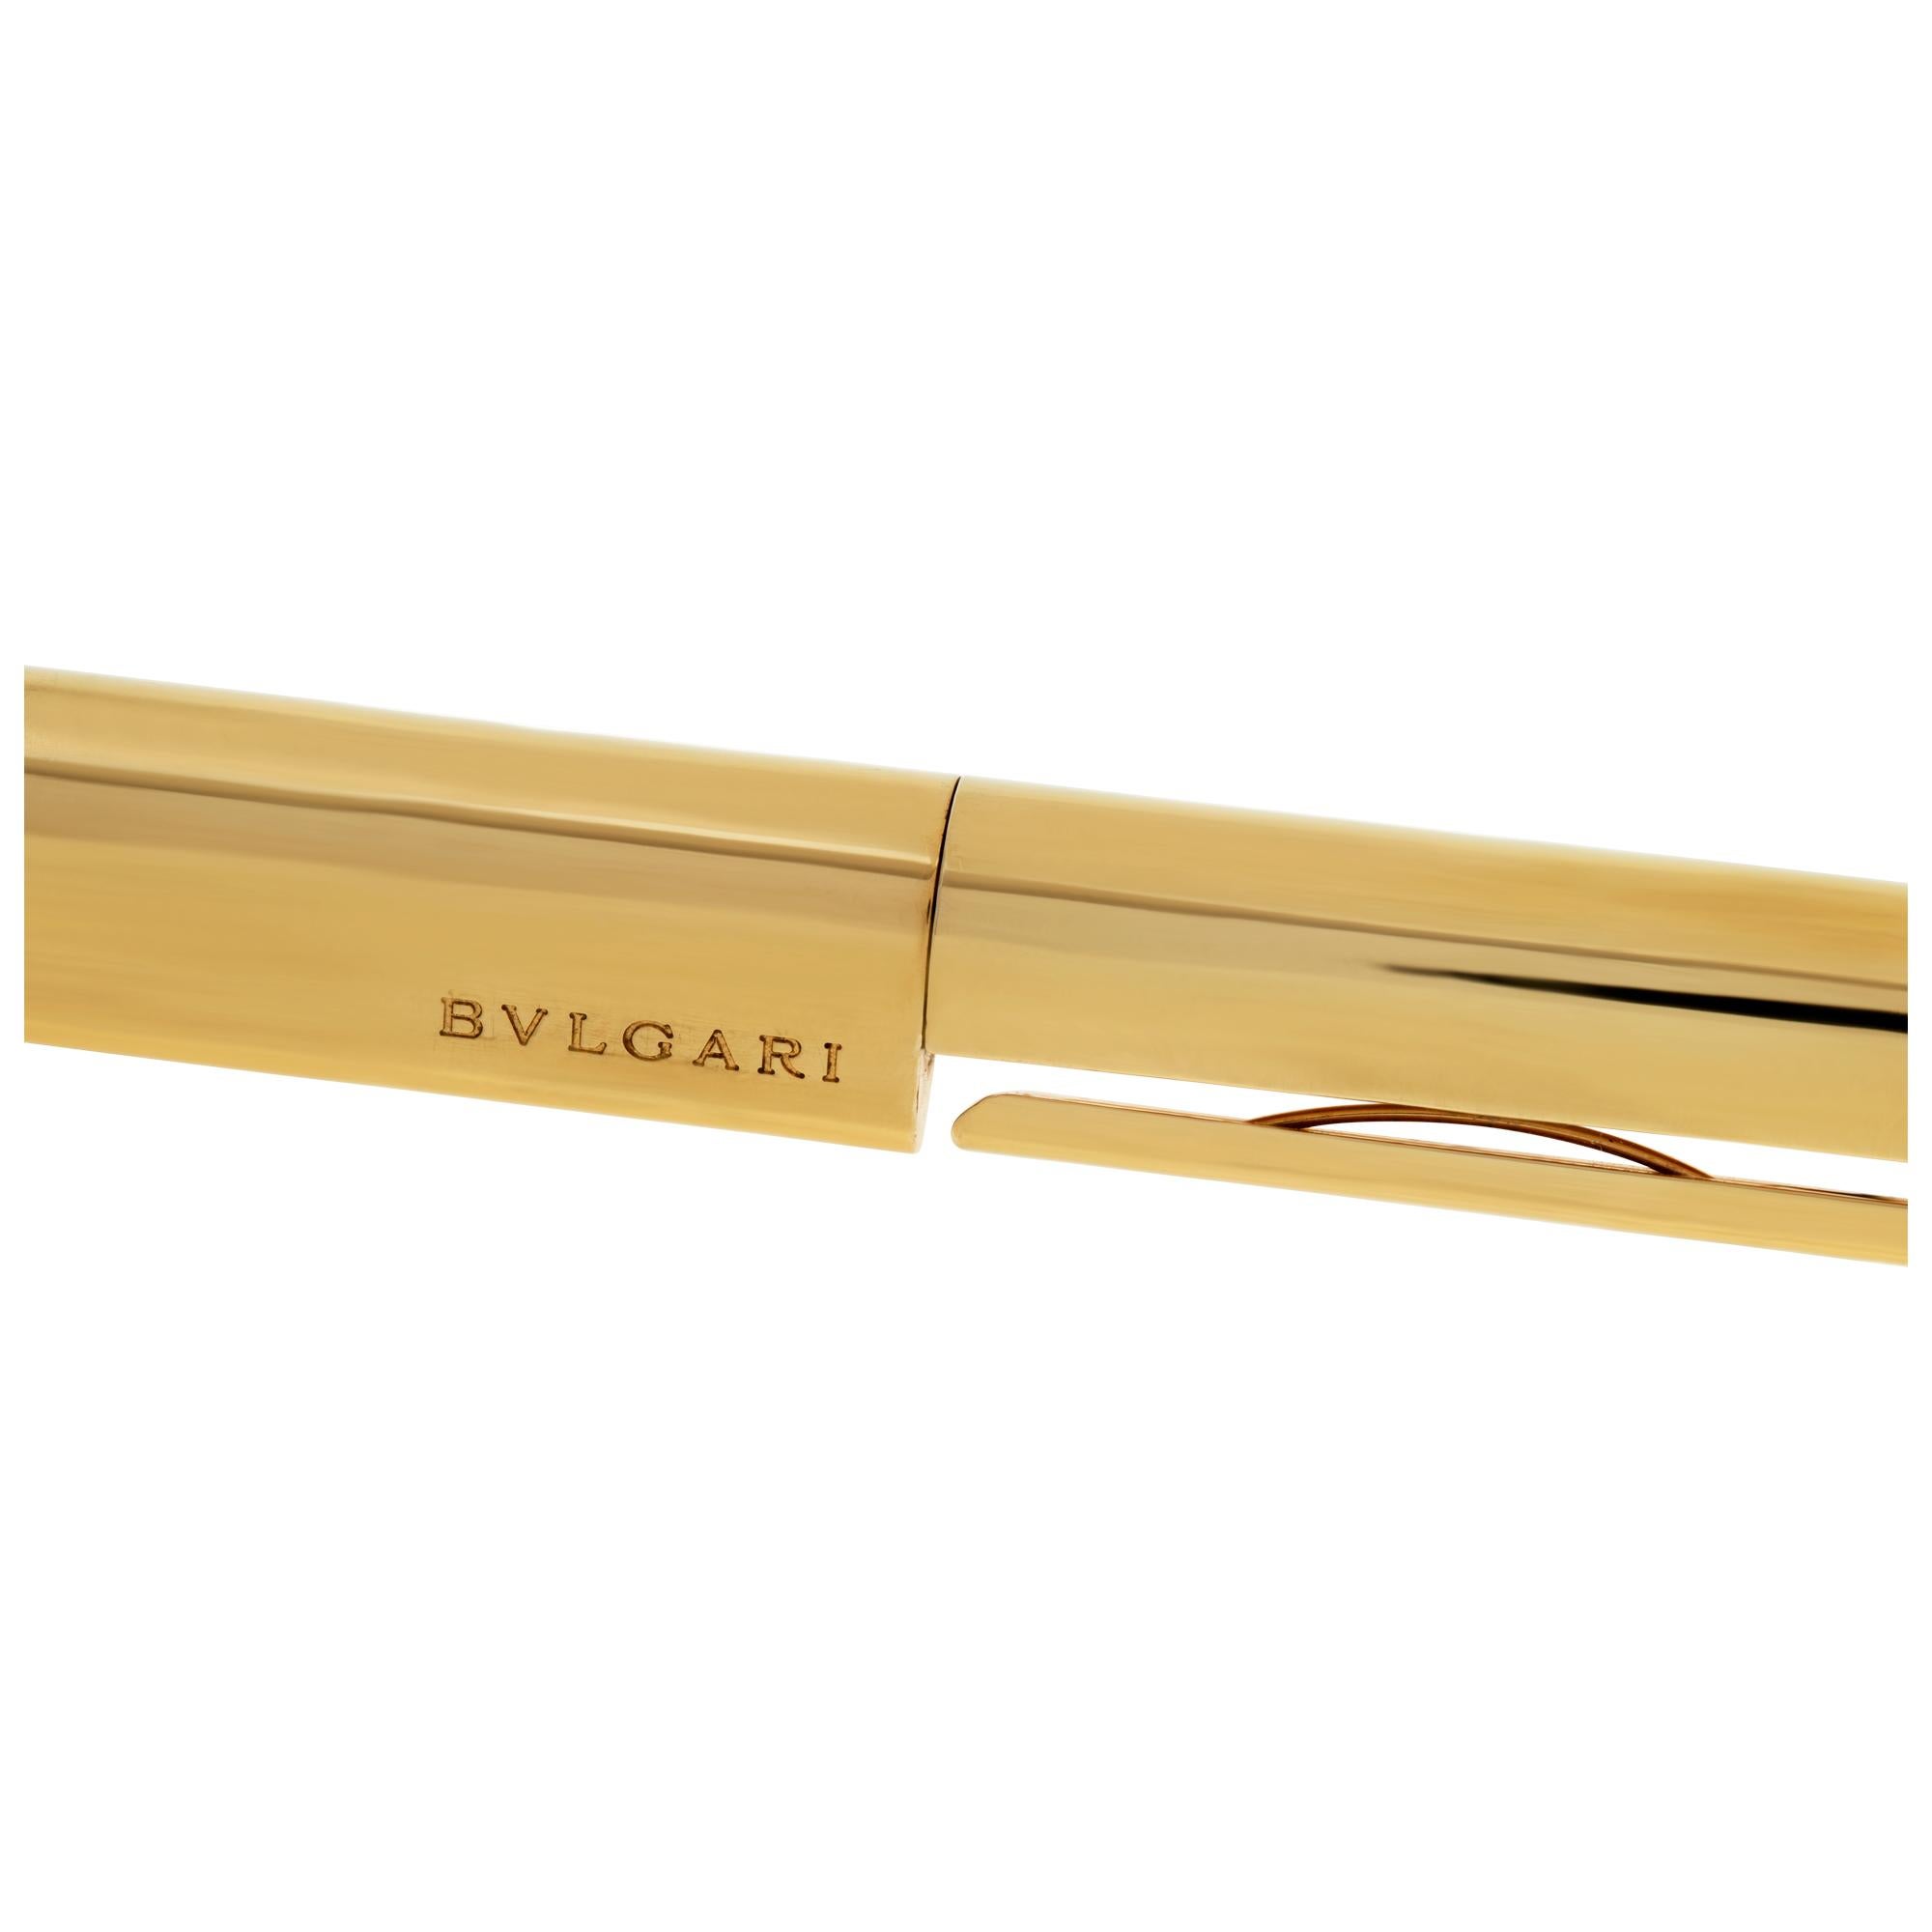 Bvlgari ECCENTRIC 18k yellow gold plated short ballpoint pen. Length 5.5 inches.